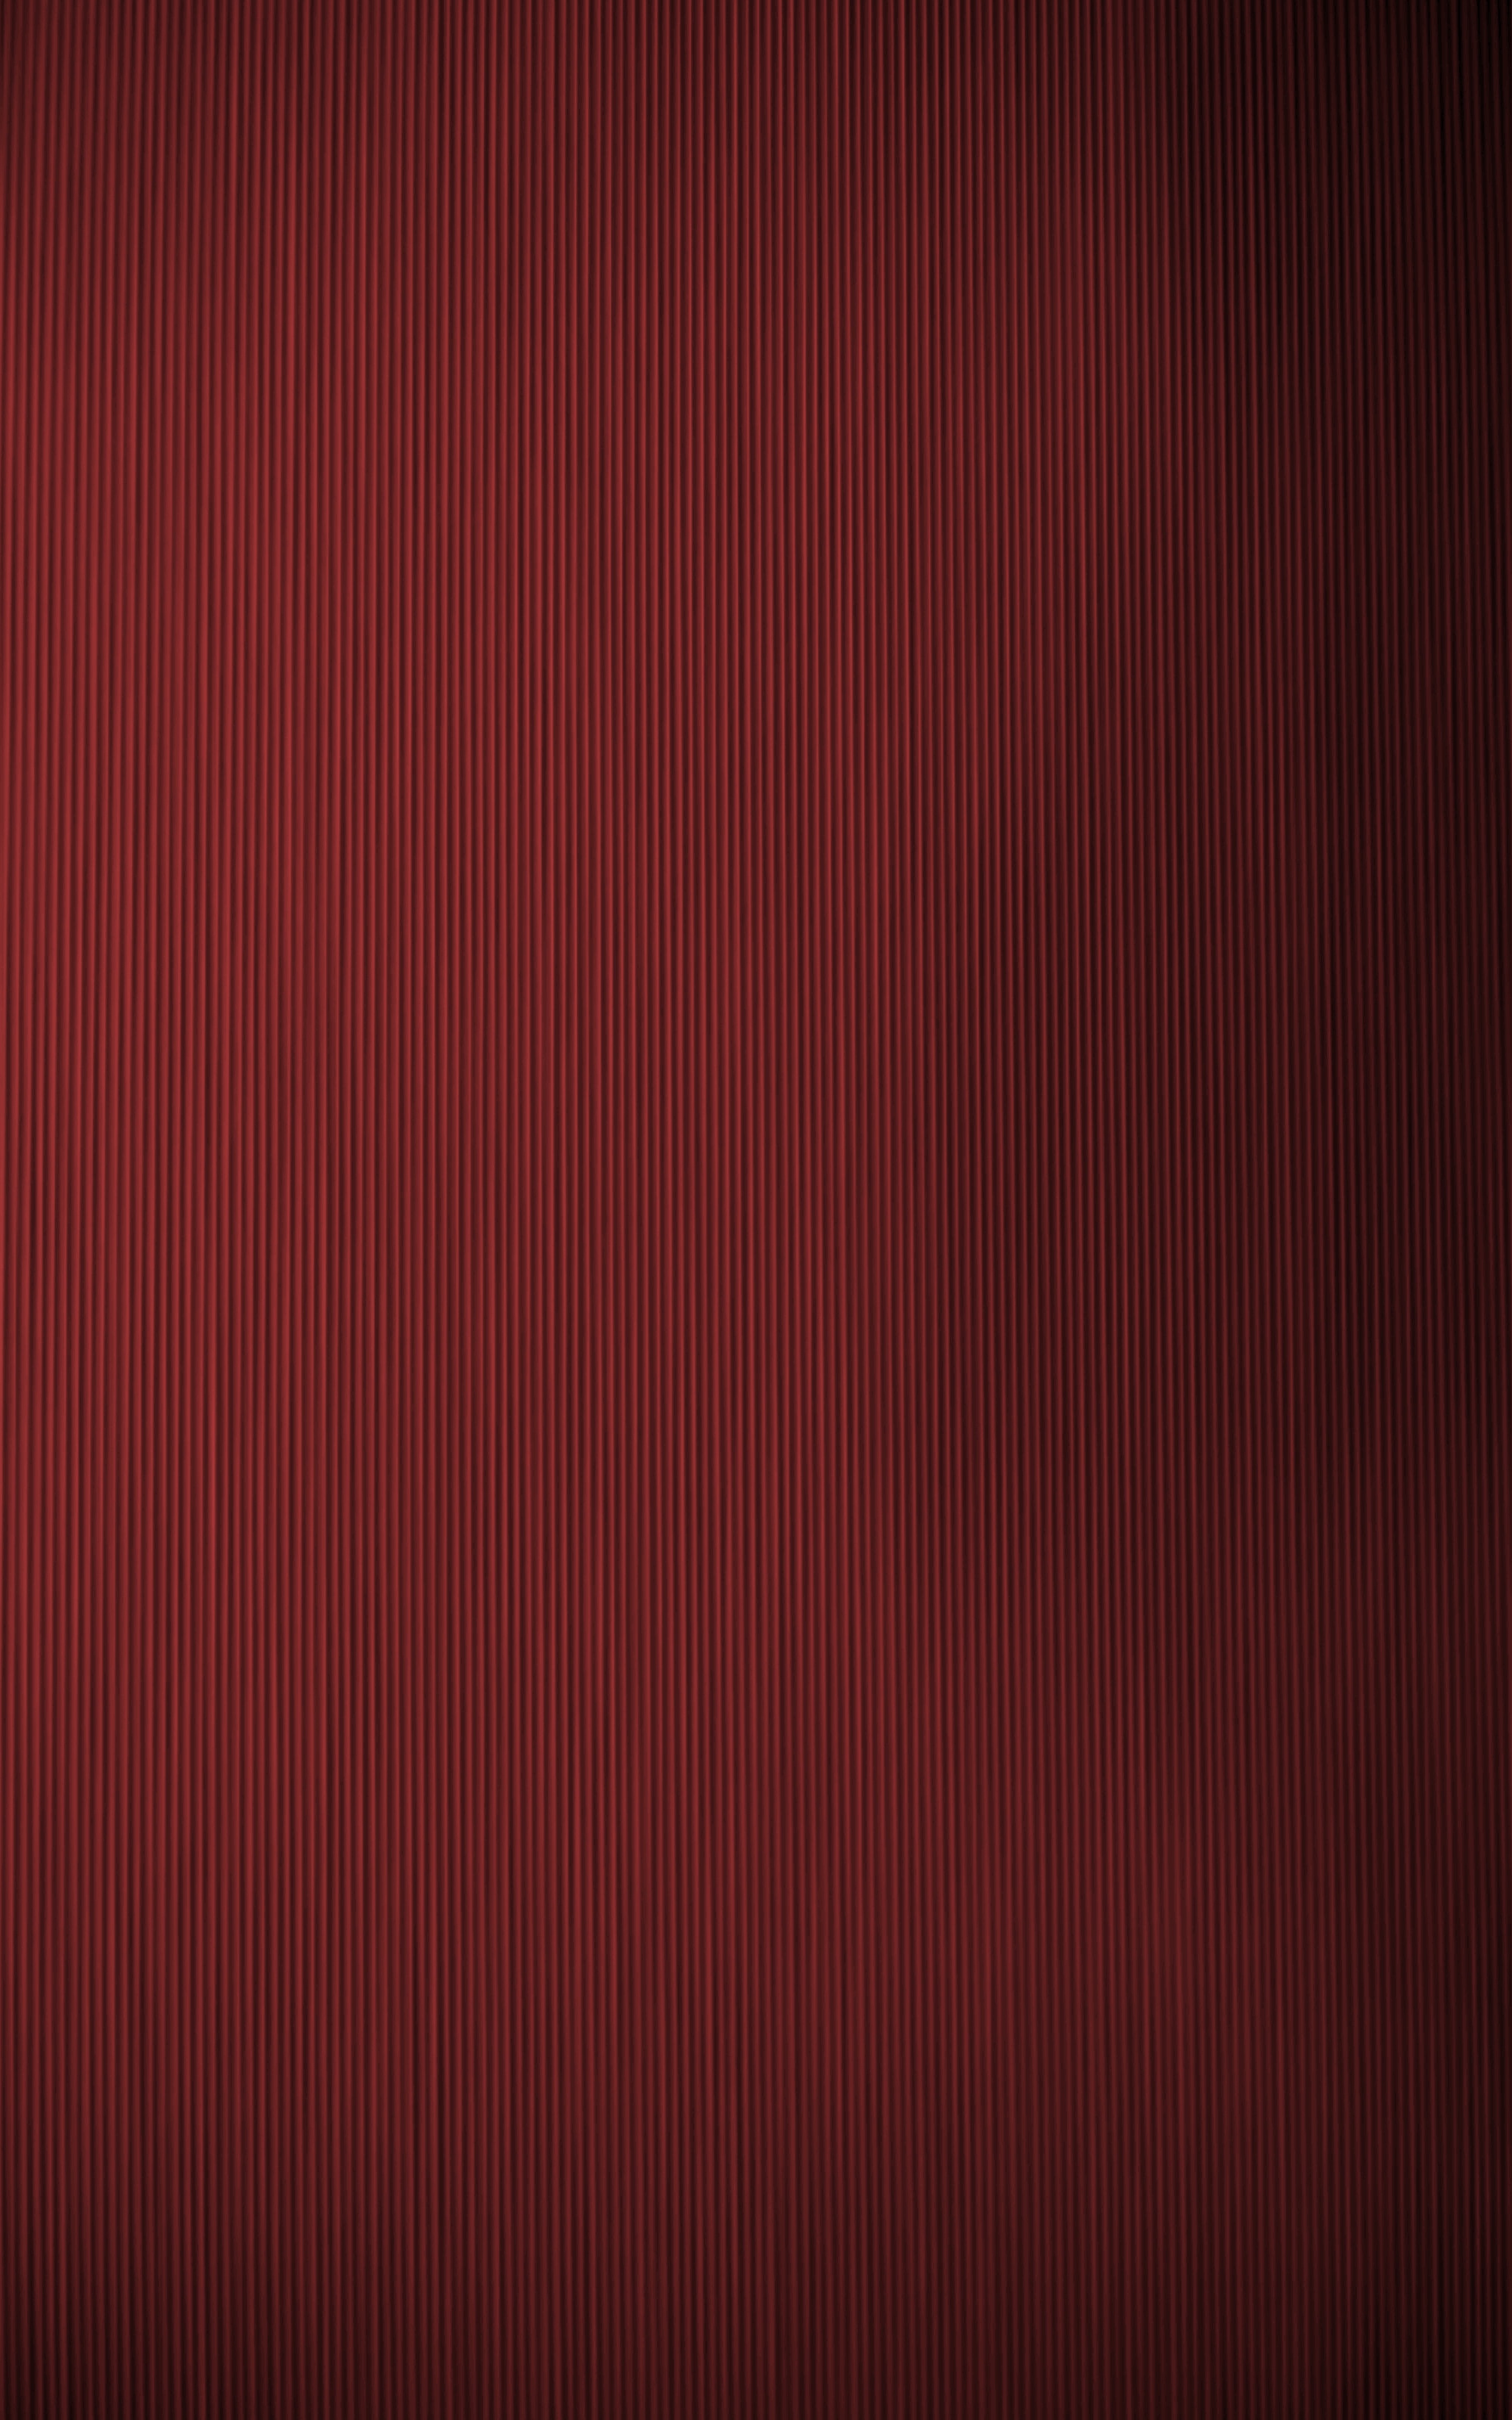 High Definition wallpaper gradient, textures, stripes, streaks